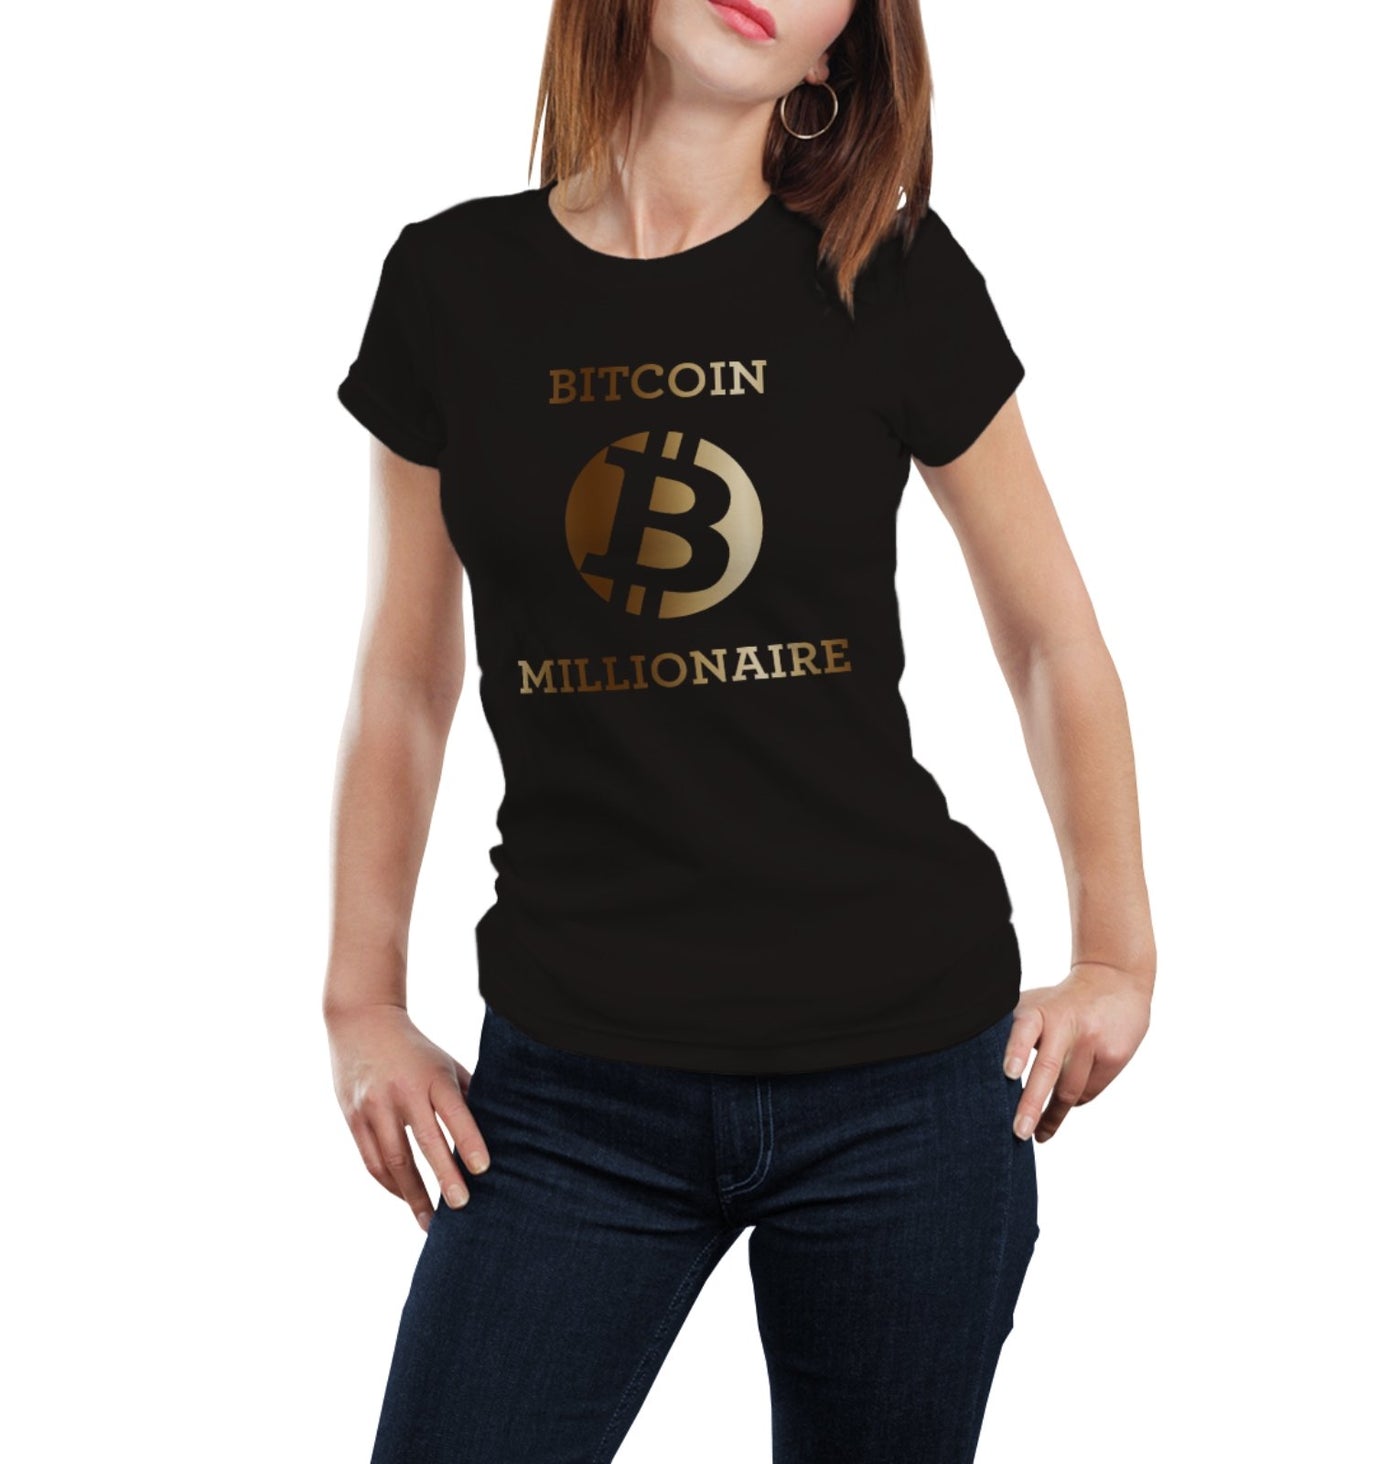 Bild: T-Shirt - Bitcoin Millionaire - BTC Geschenkidee